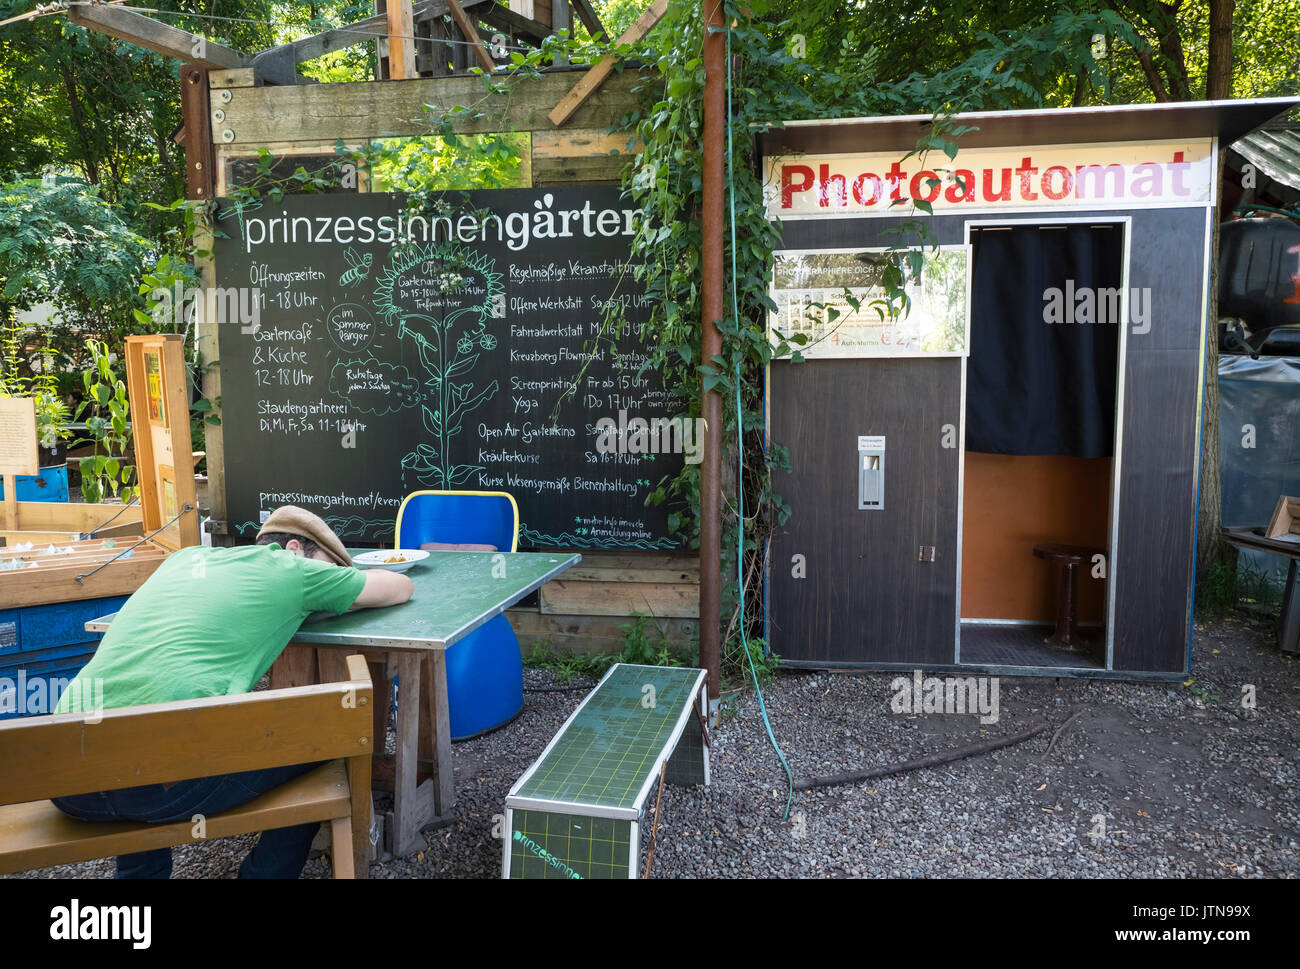 view of urban city community garden called Prinzessinnengarten in Kreuzberg, Berlin, Germany. Stock Photo